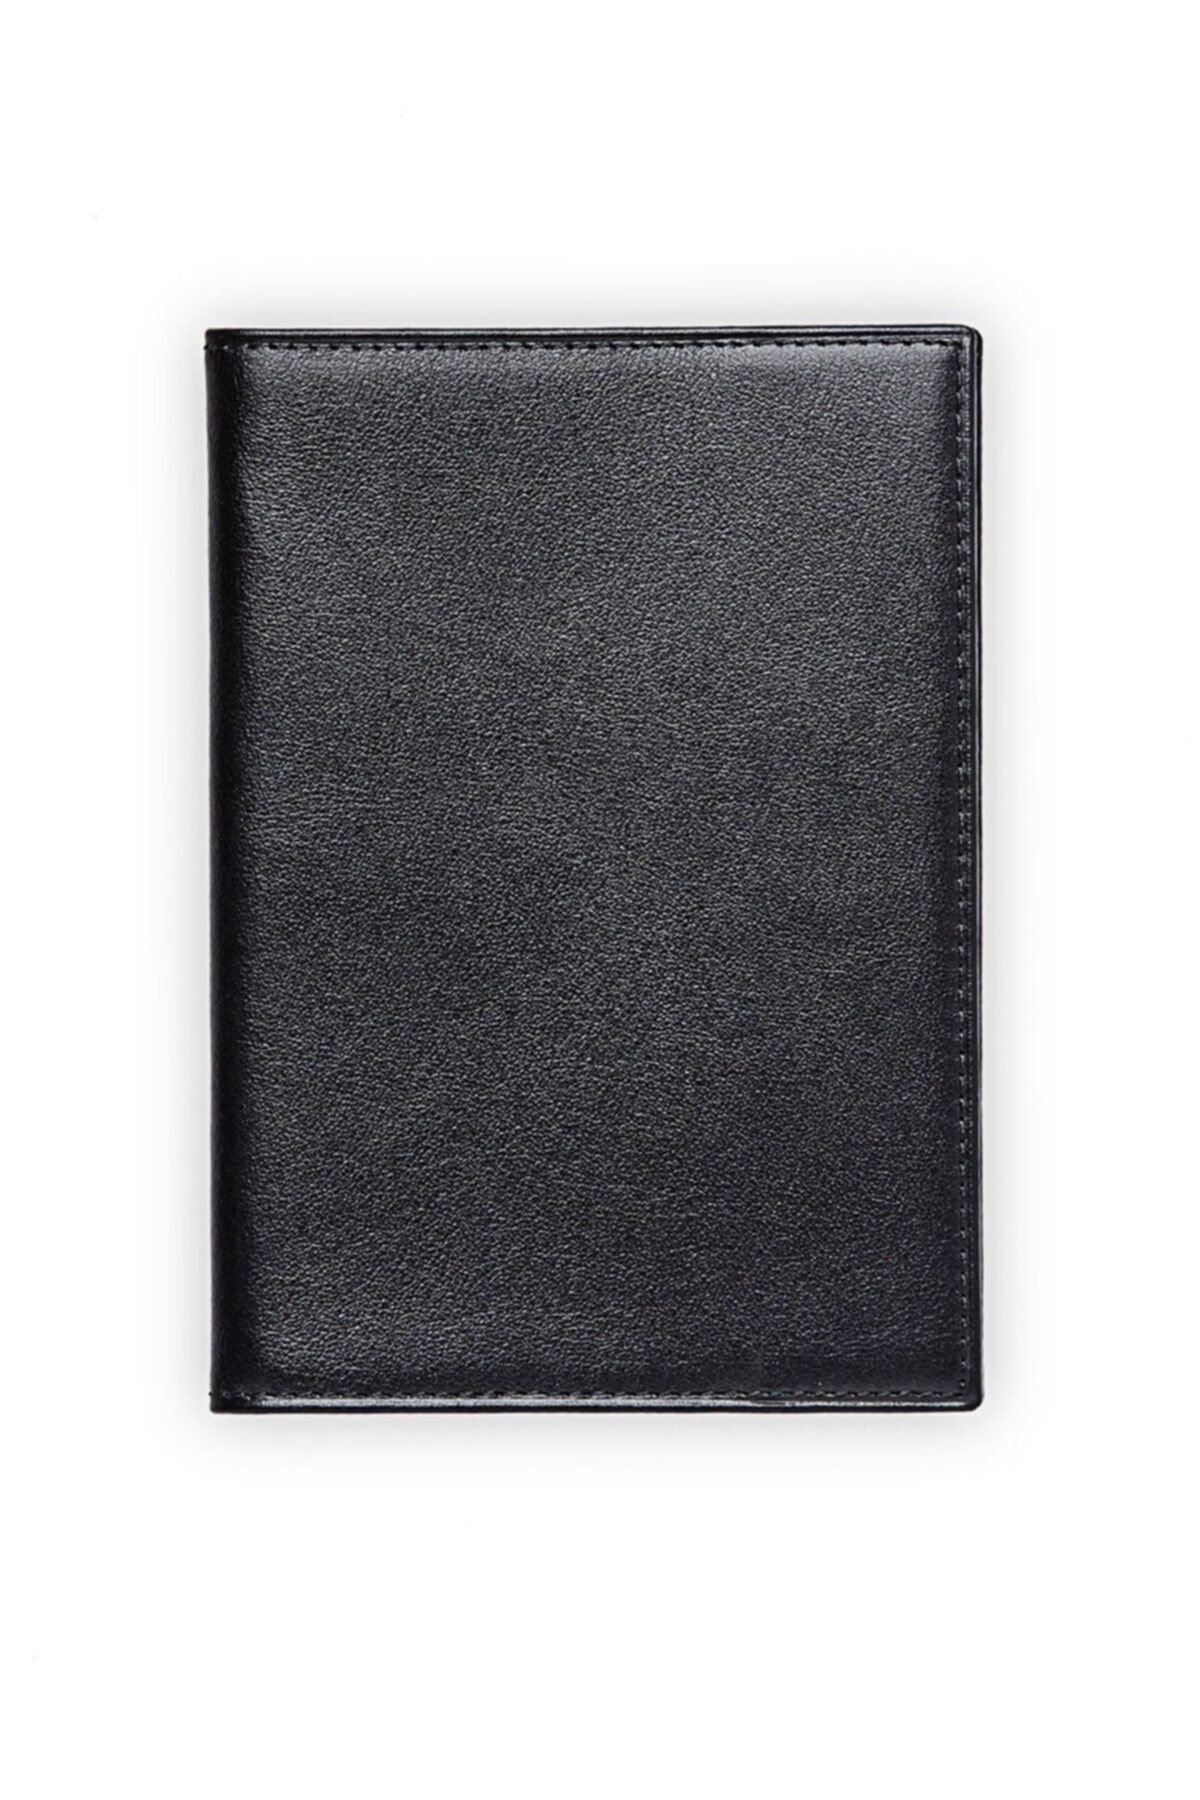 EMNANA Deri Pasaport Cüzdanı - Siyah